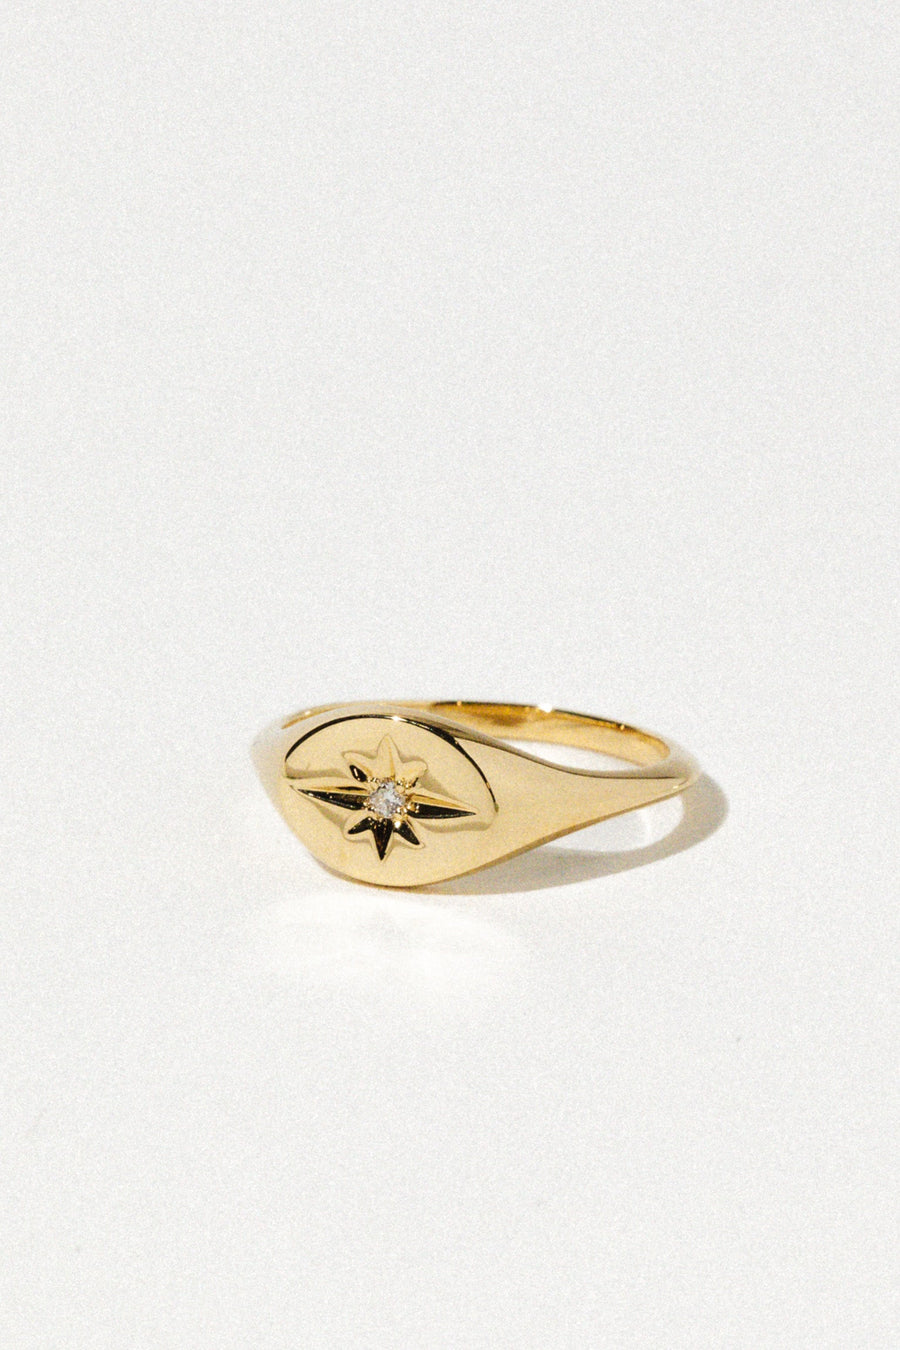 Tresor Jewelry US 7 / Gold 14kt North Star Ring